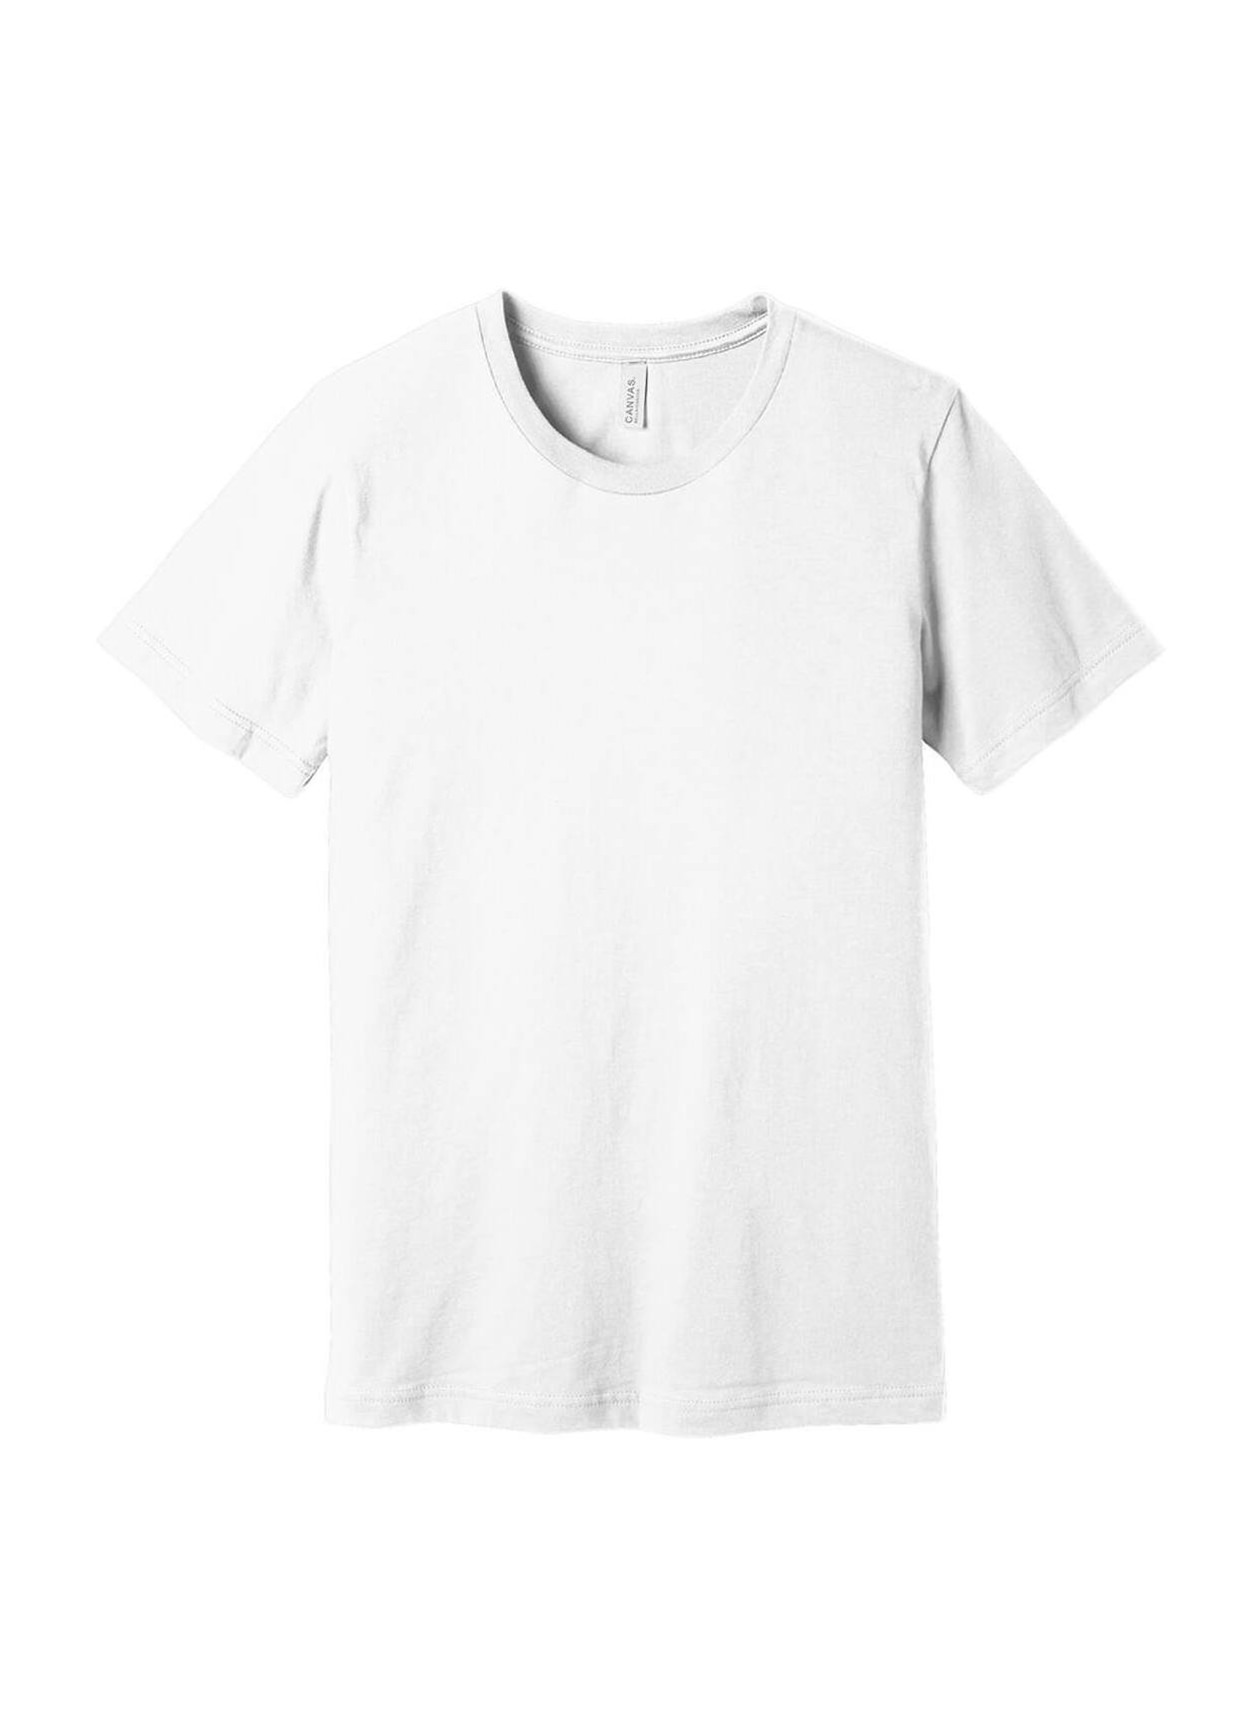 Bella + Canvas Men's Solid White Blend Heather CVC T-Shirt